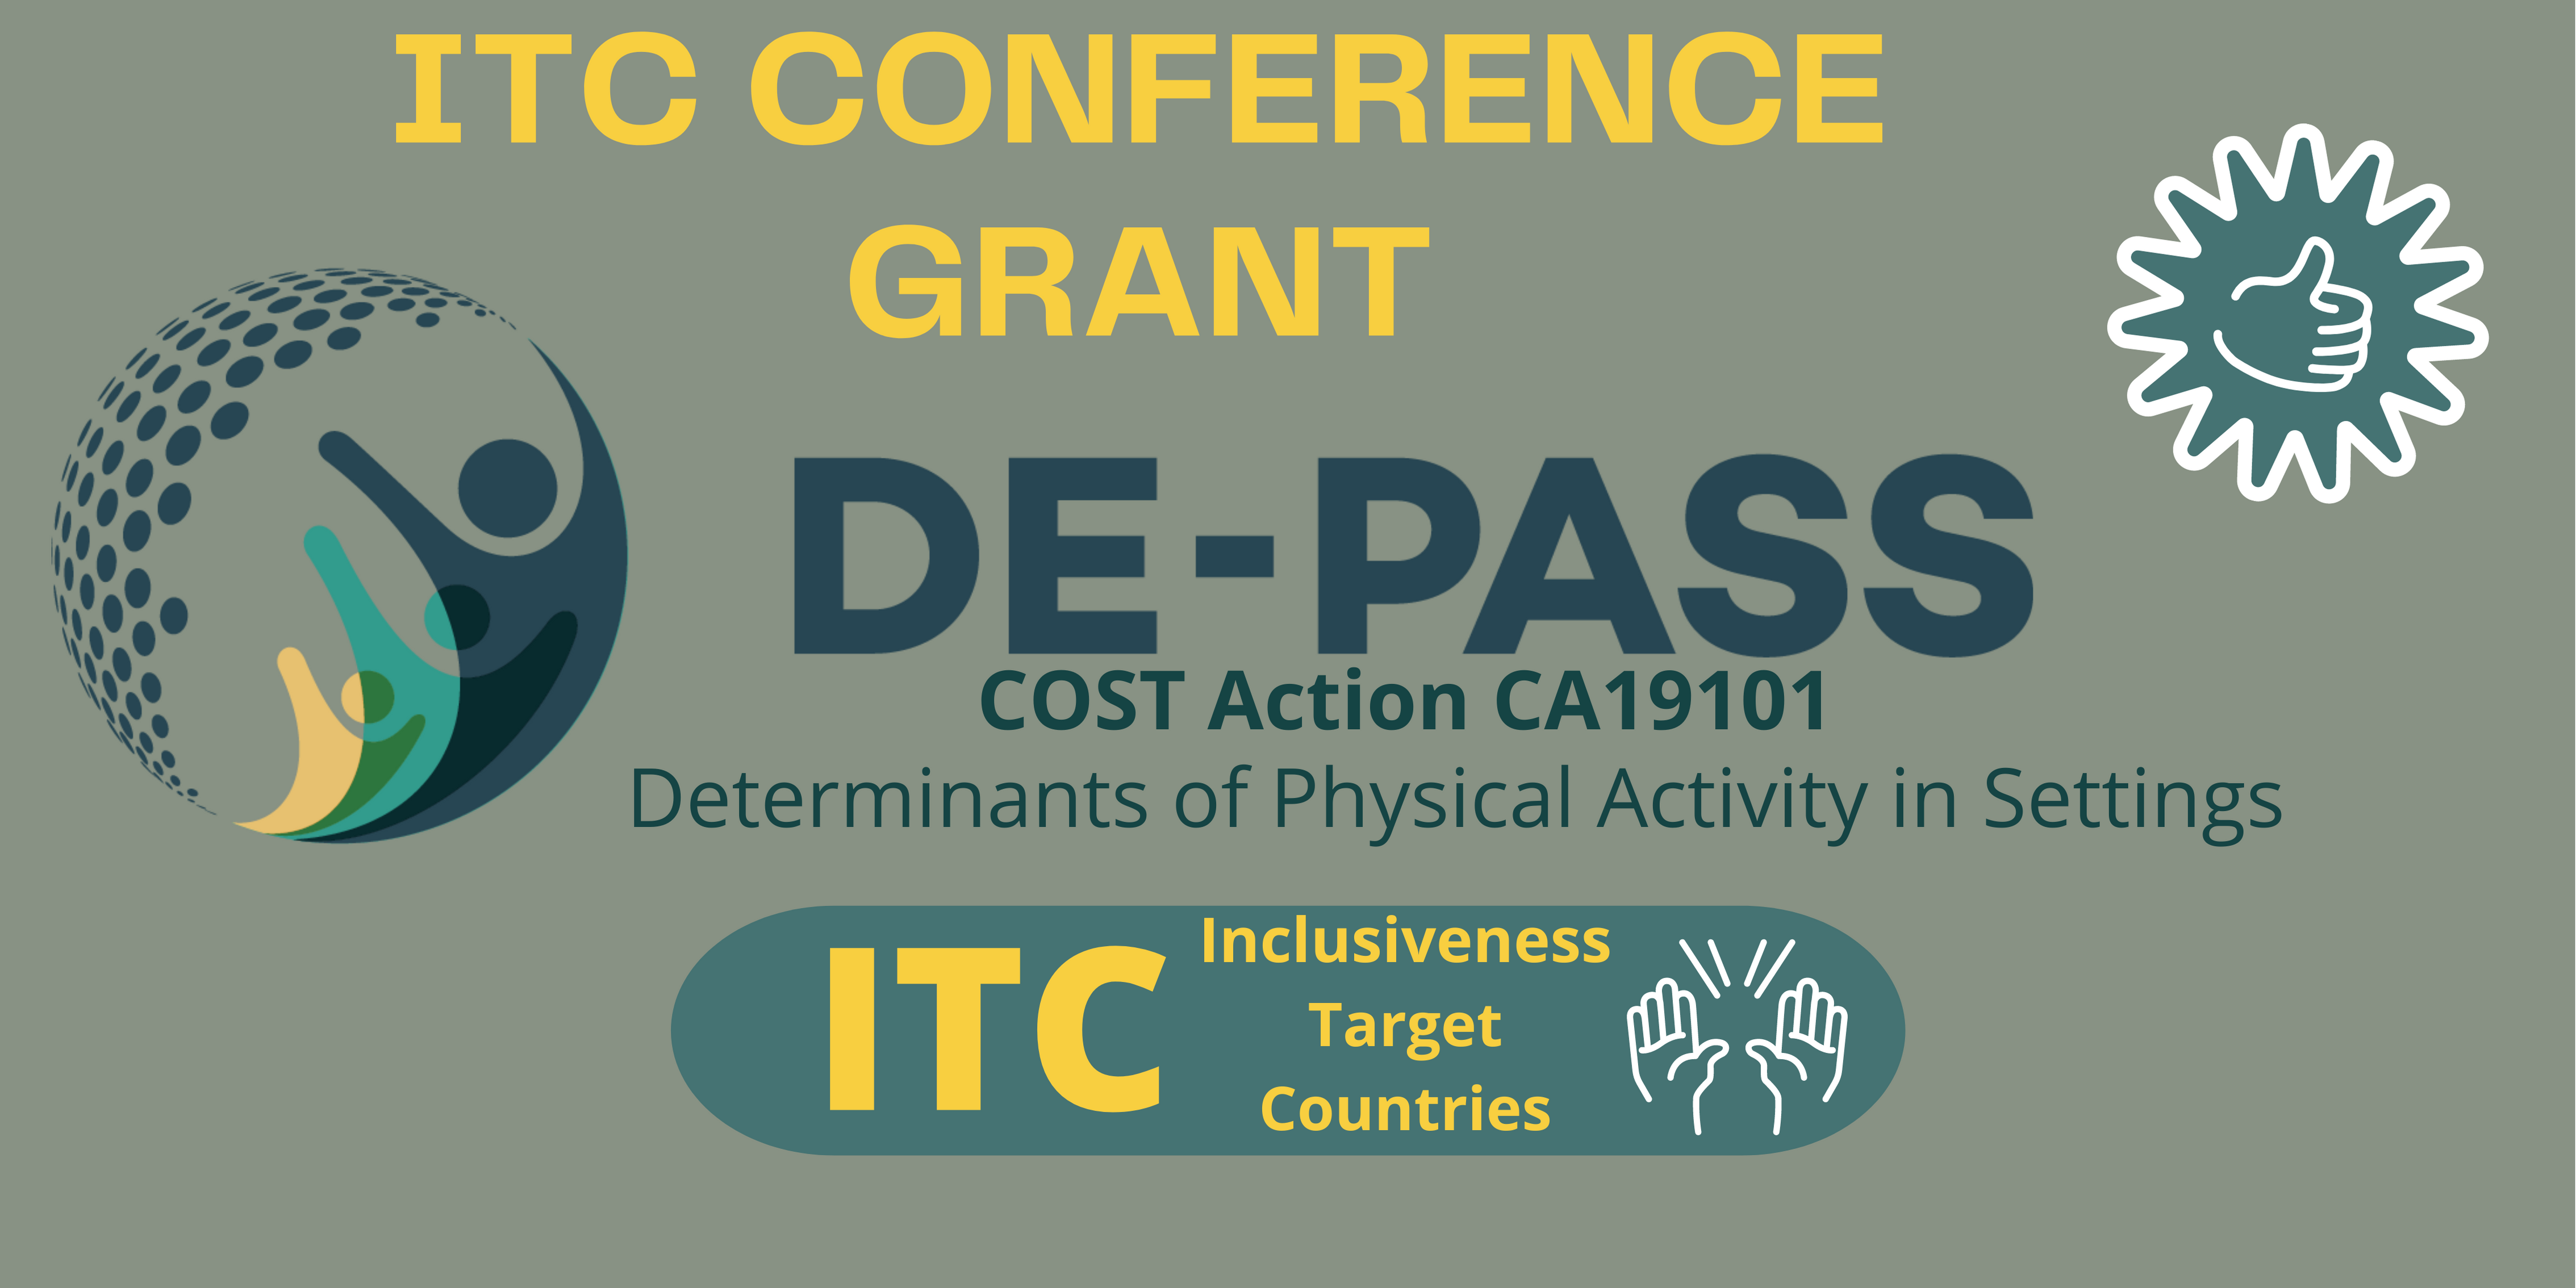 ITC Conference Grant